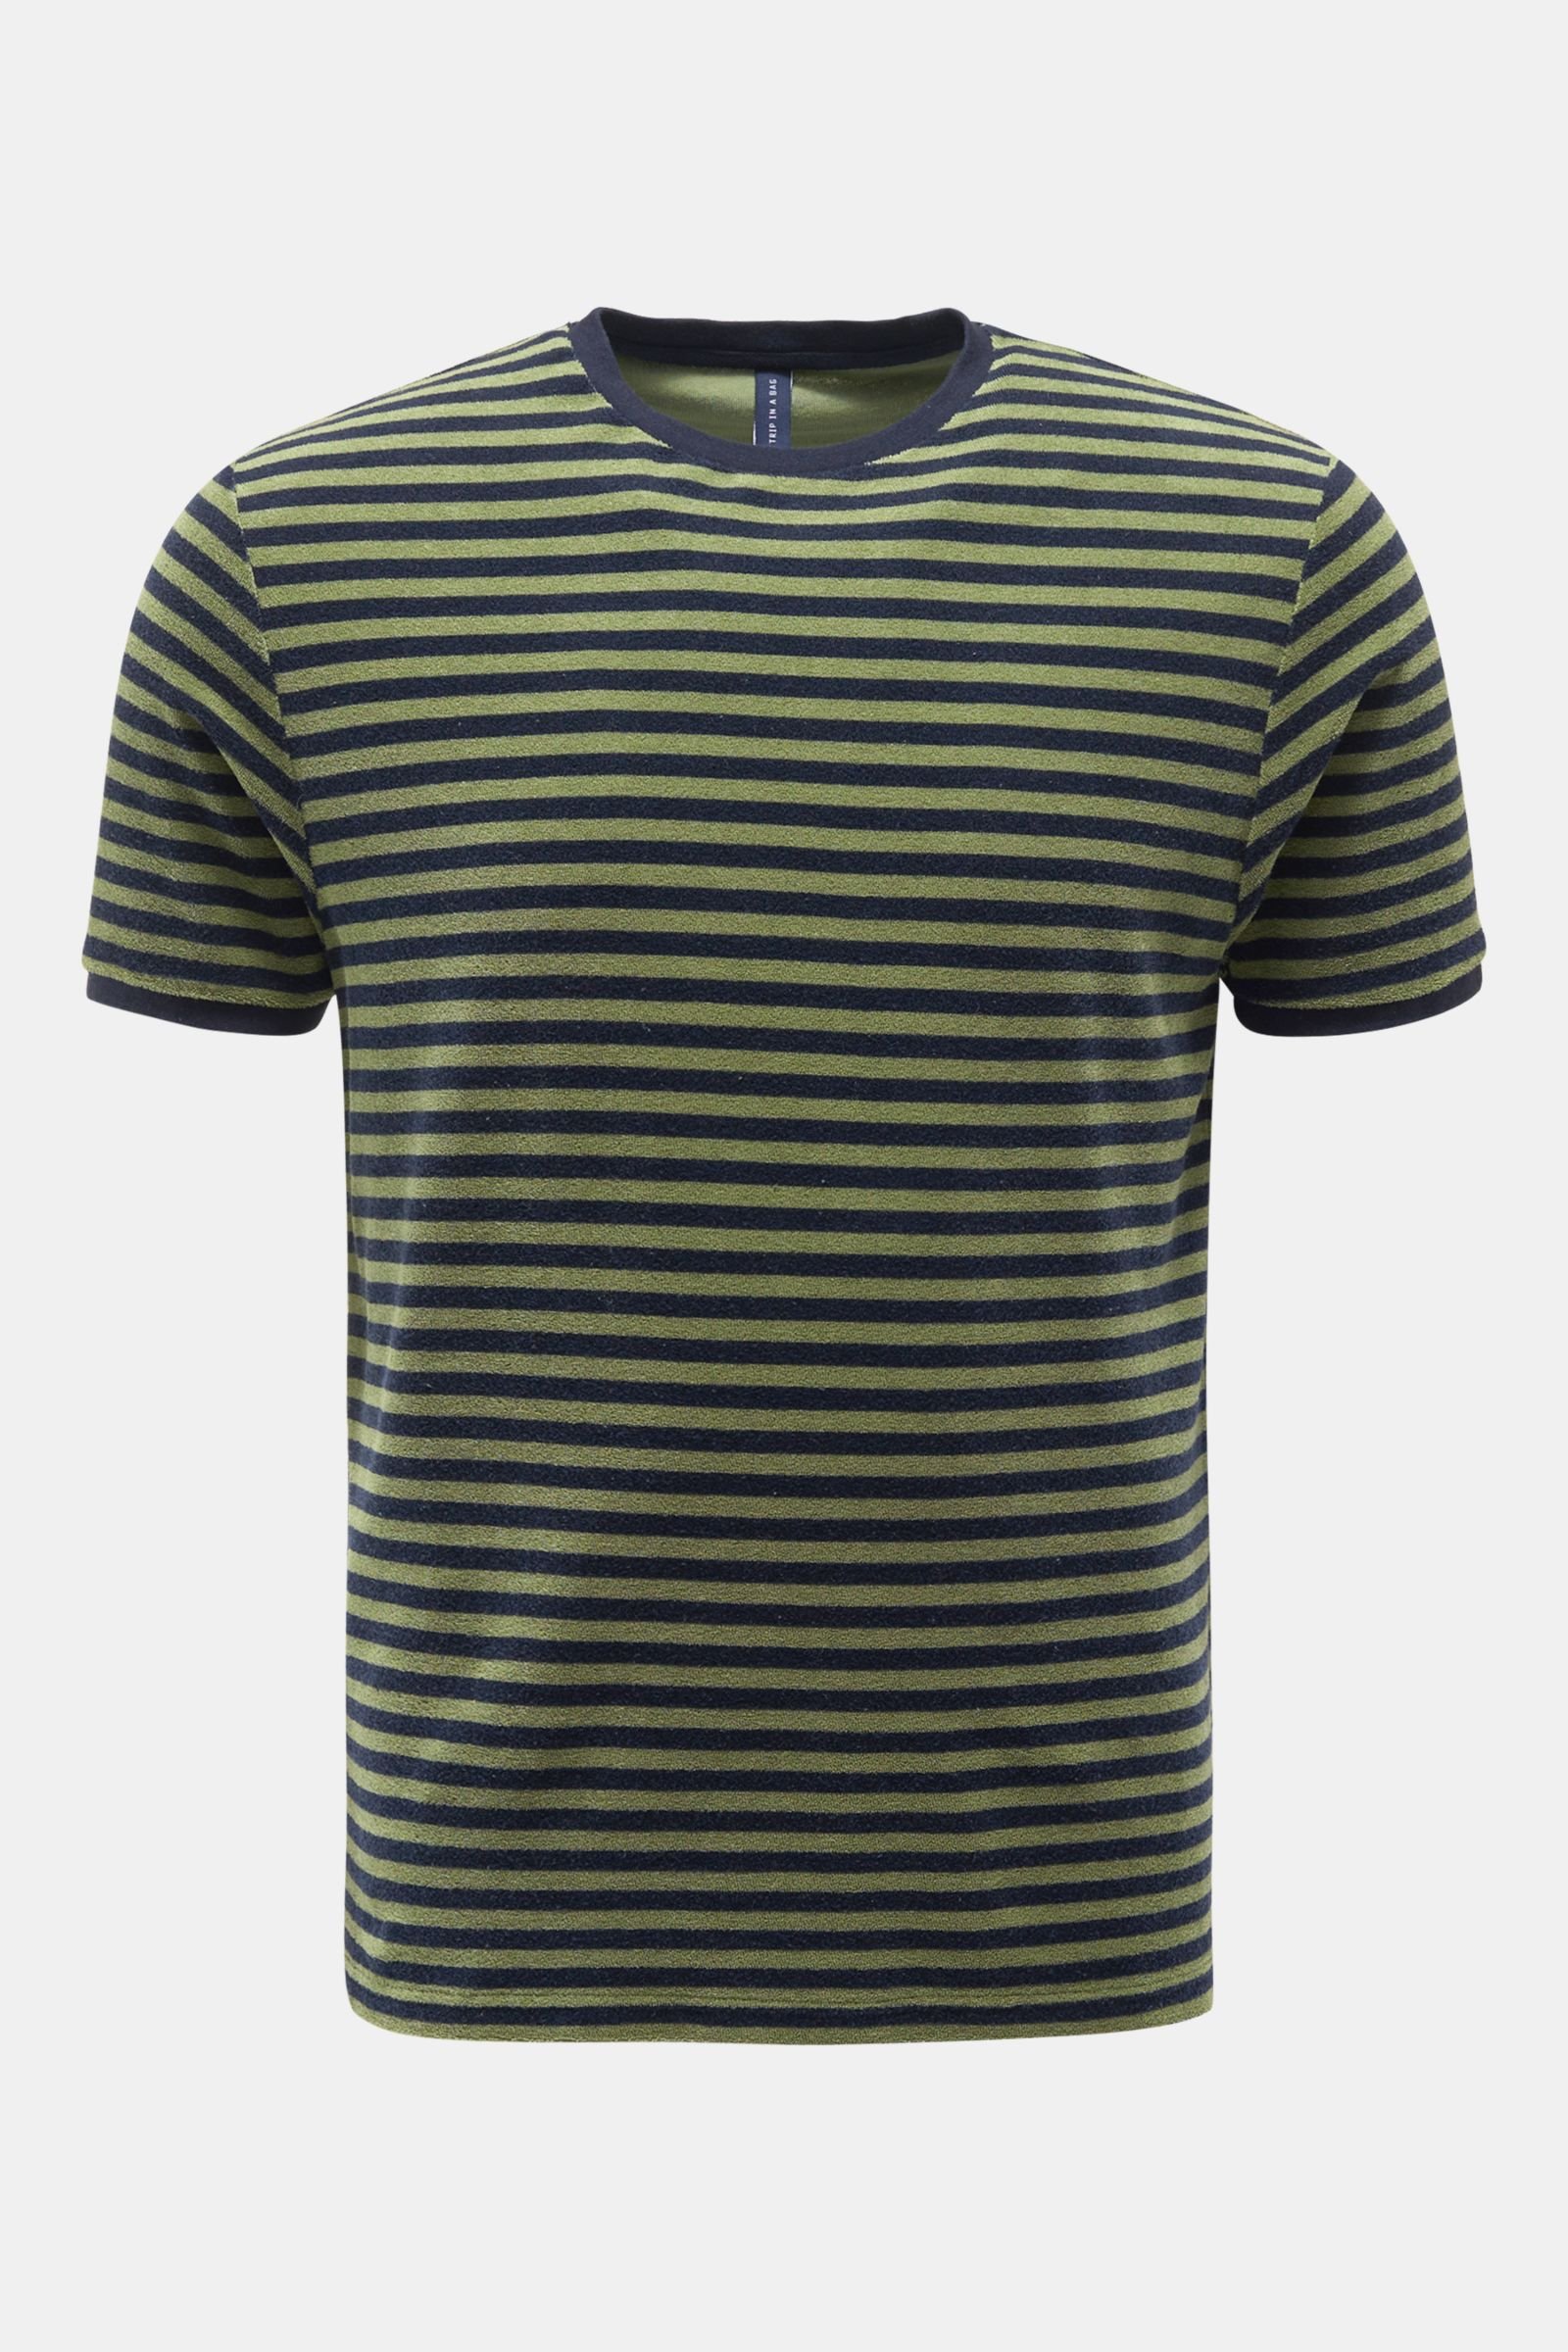 Terrycloth crew neck T-shirt 'Terry Stripe Tee' olive/black striped